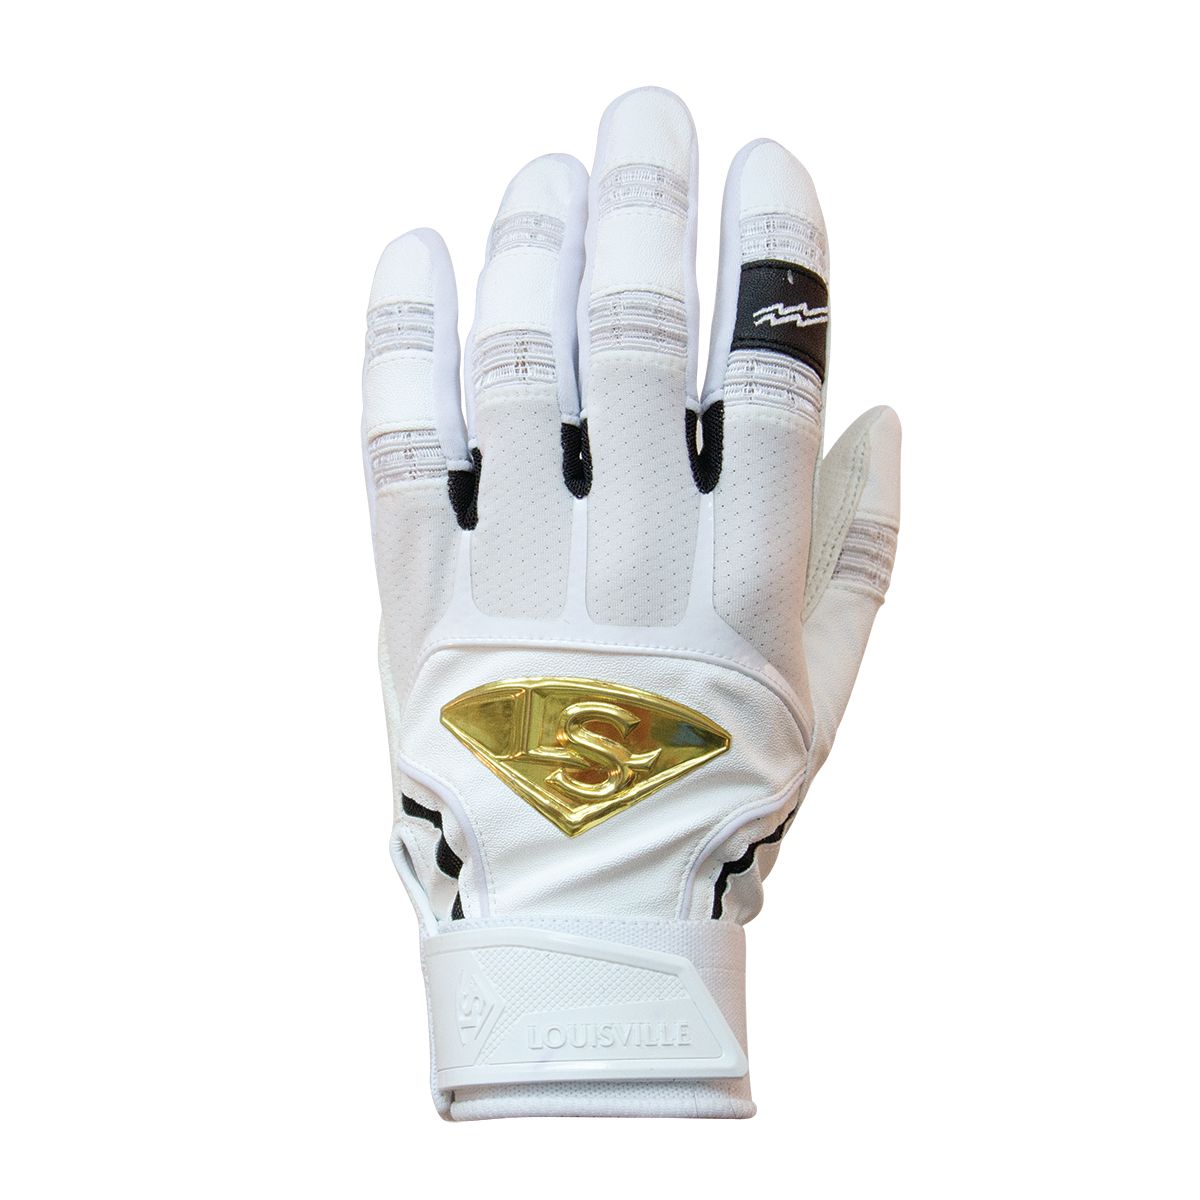 Louisville Prime Batting Gloves - White/Gold